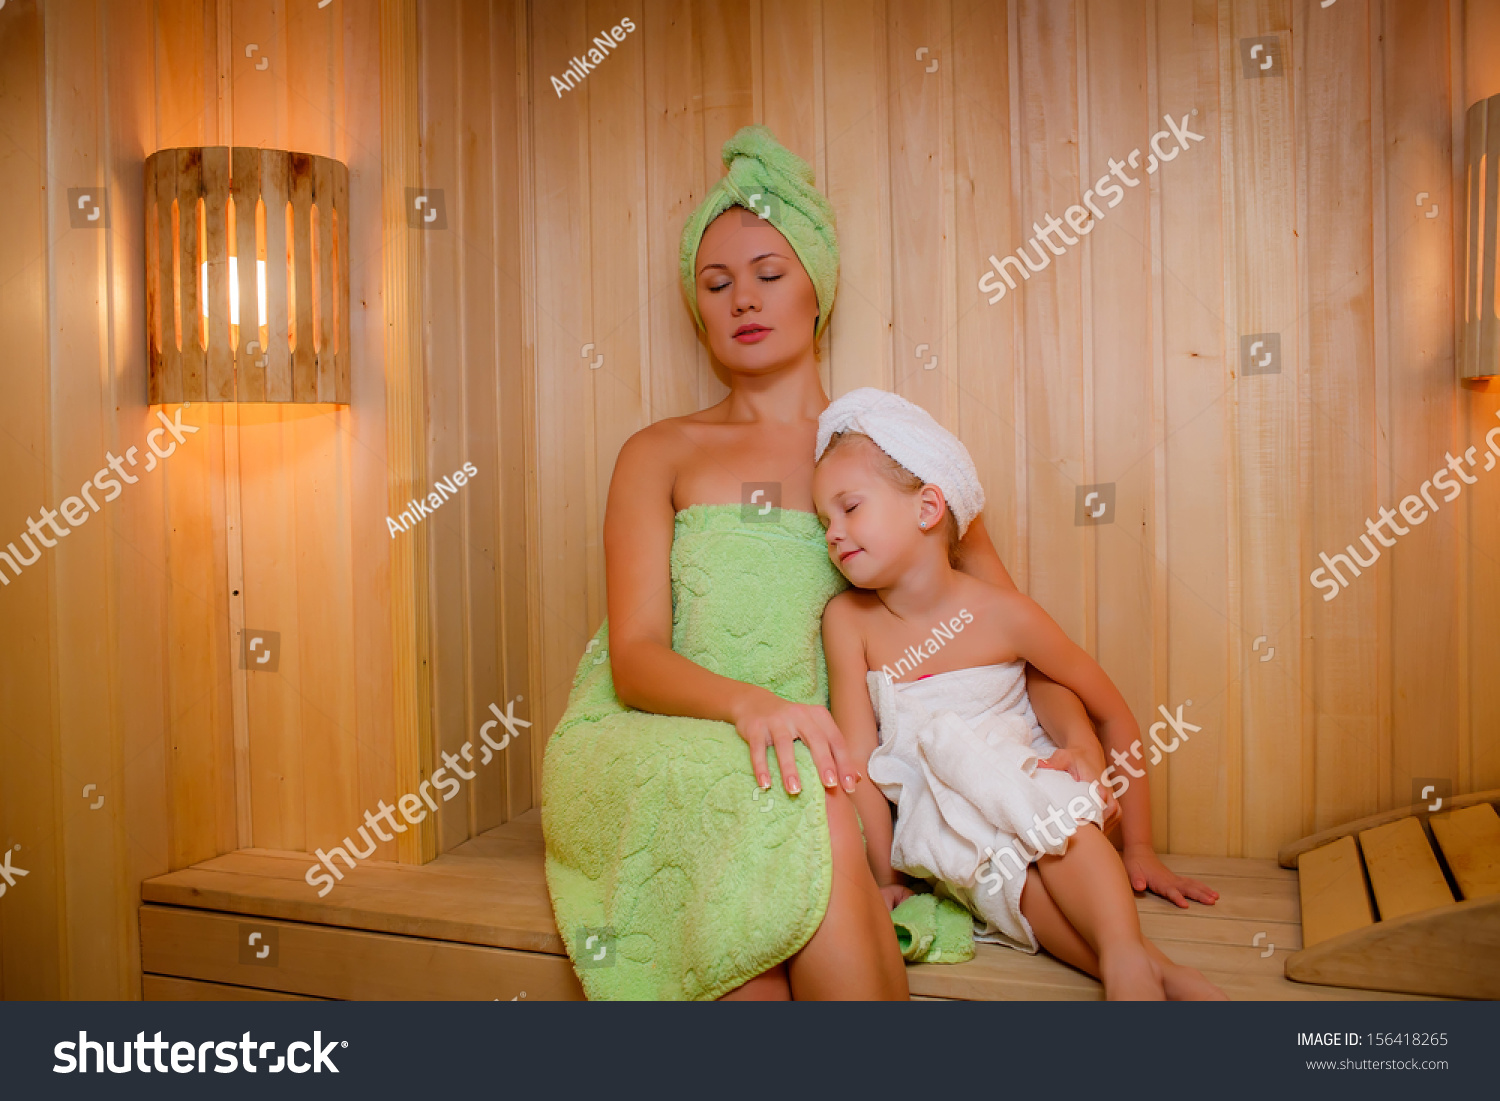 в бане голыми дети и родители фото 23